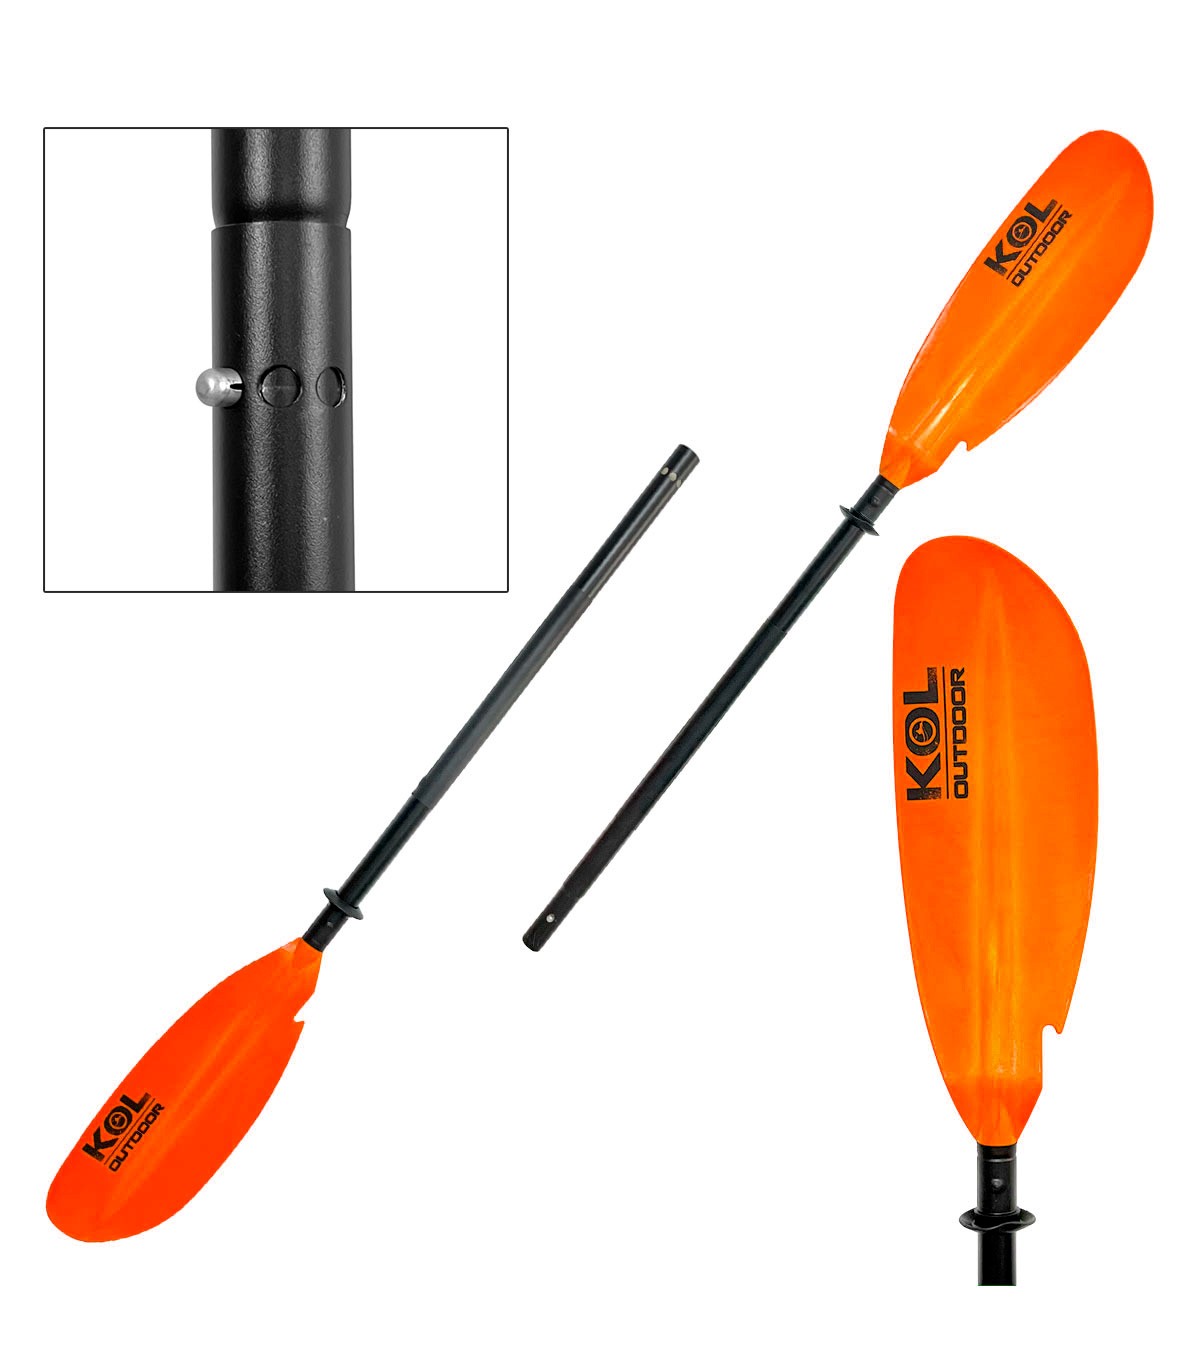 Remo Kayak Desmontable Kol Outdoor De Aluminio 2 Piezas - naranja - 